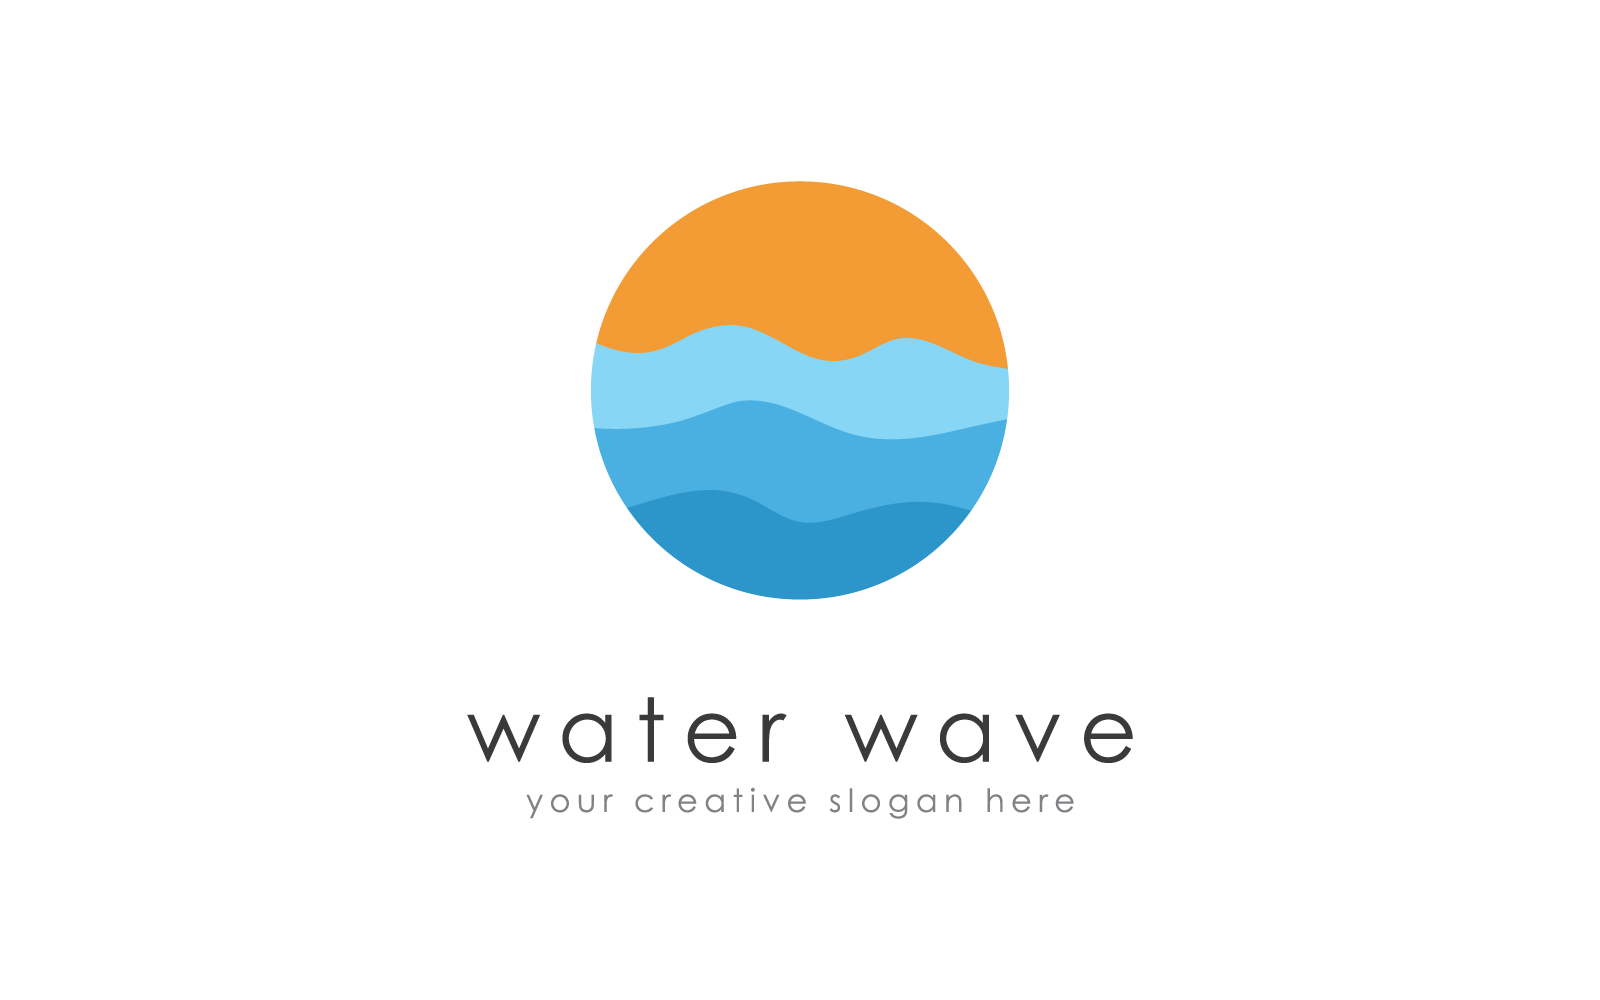 Water Wave illustration logo template design vector